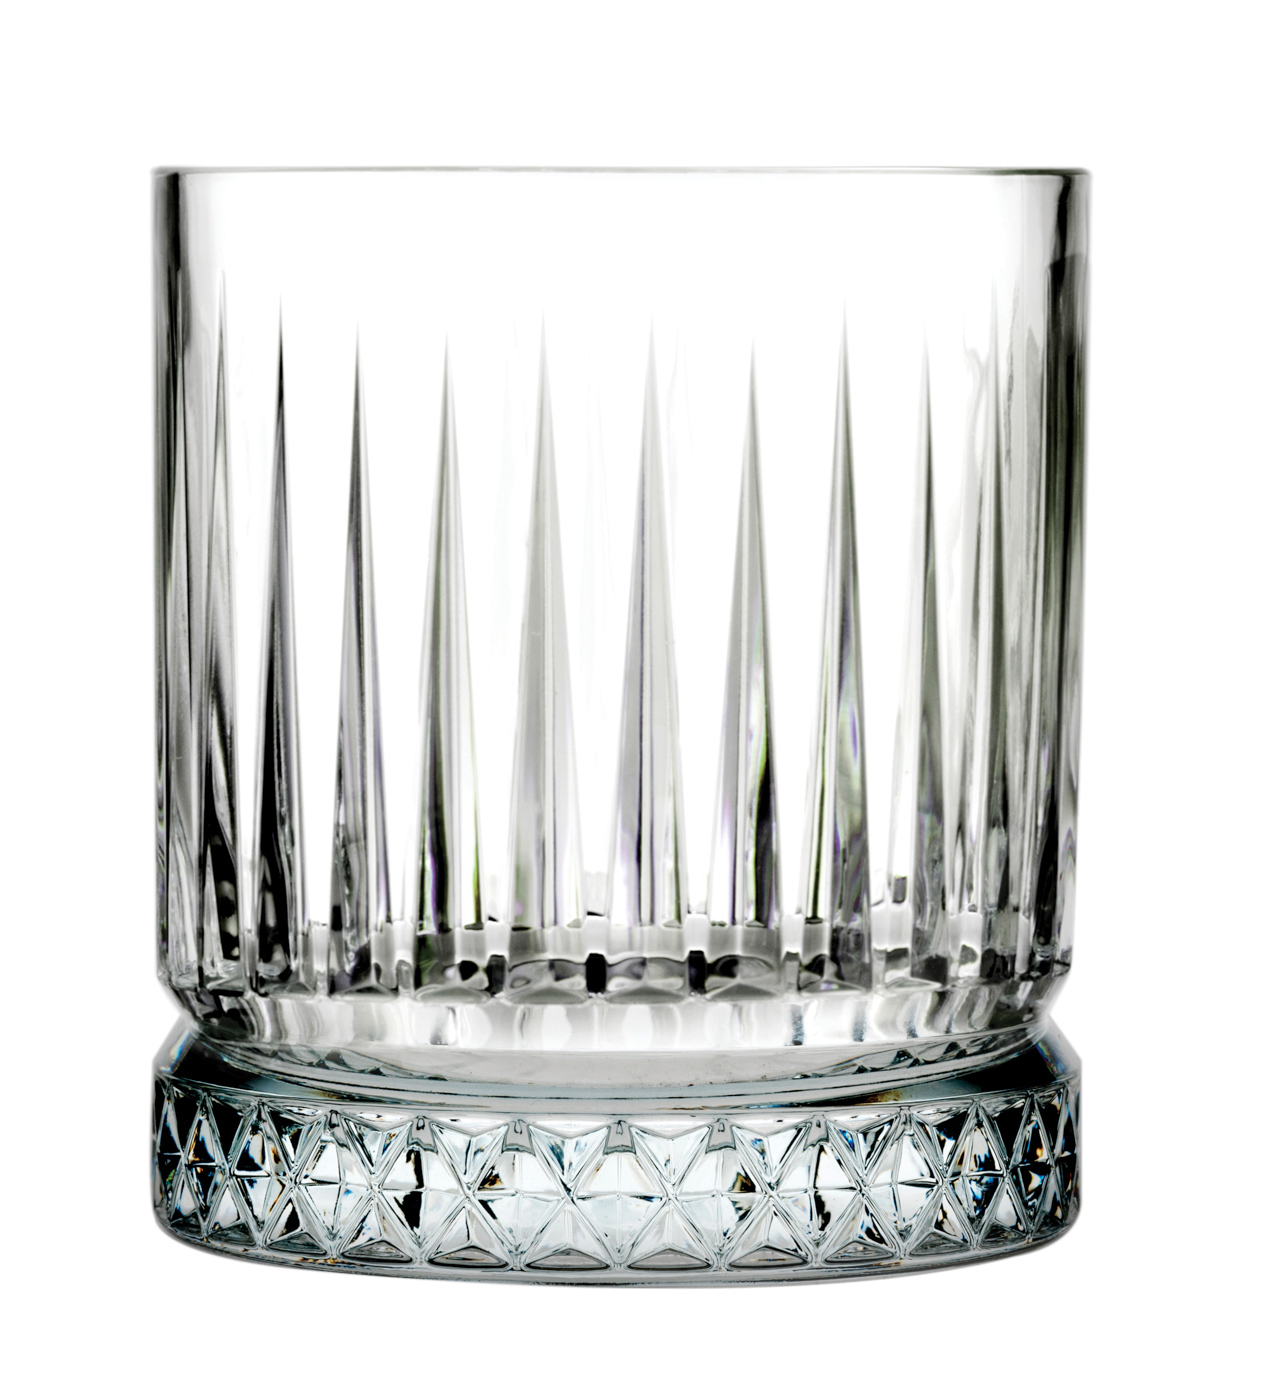 Whiskyglas Pasabahce Elysia, 0,21 ltr., Ø 7,3 cm, Set á 12 Stück, Glas